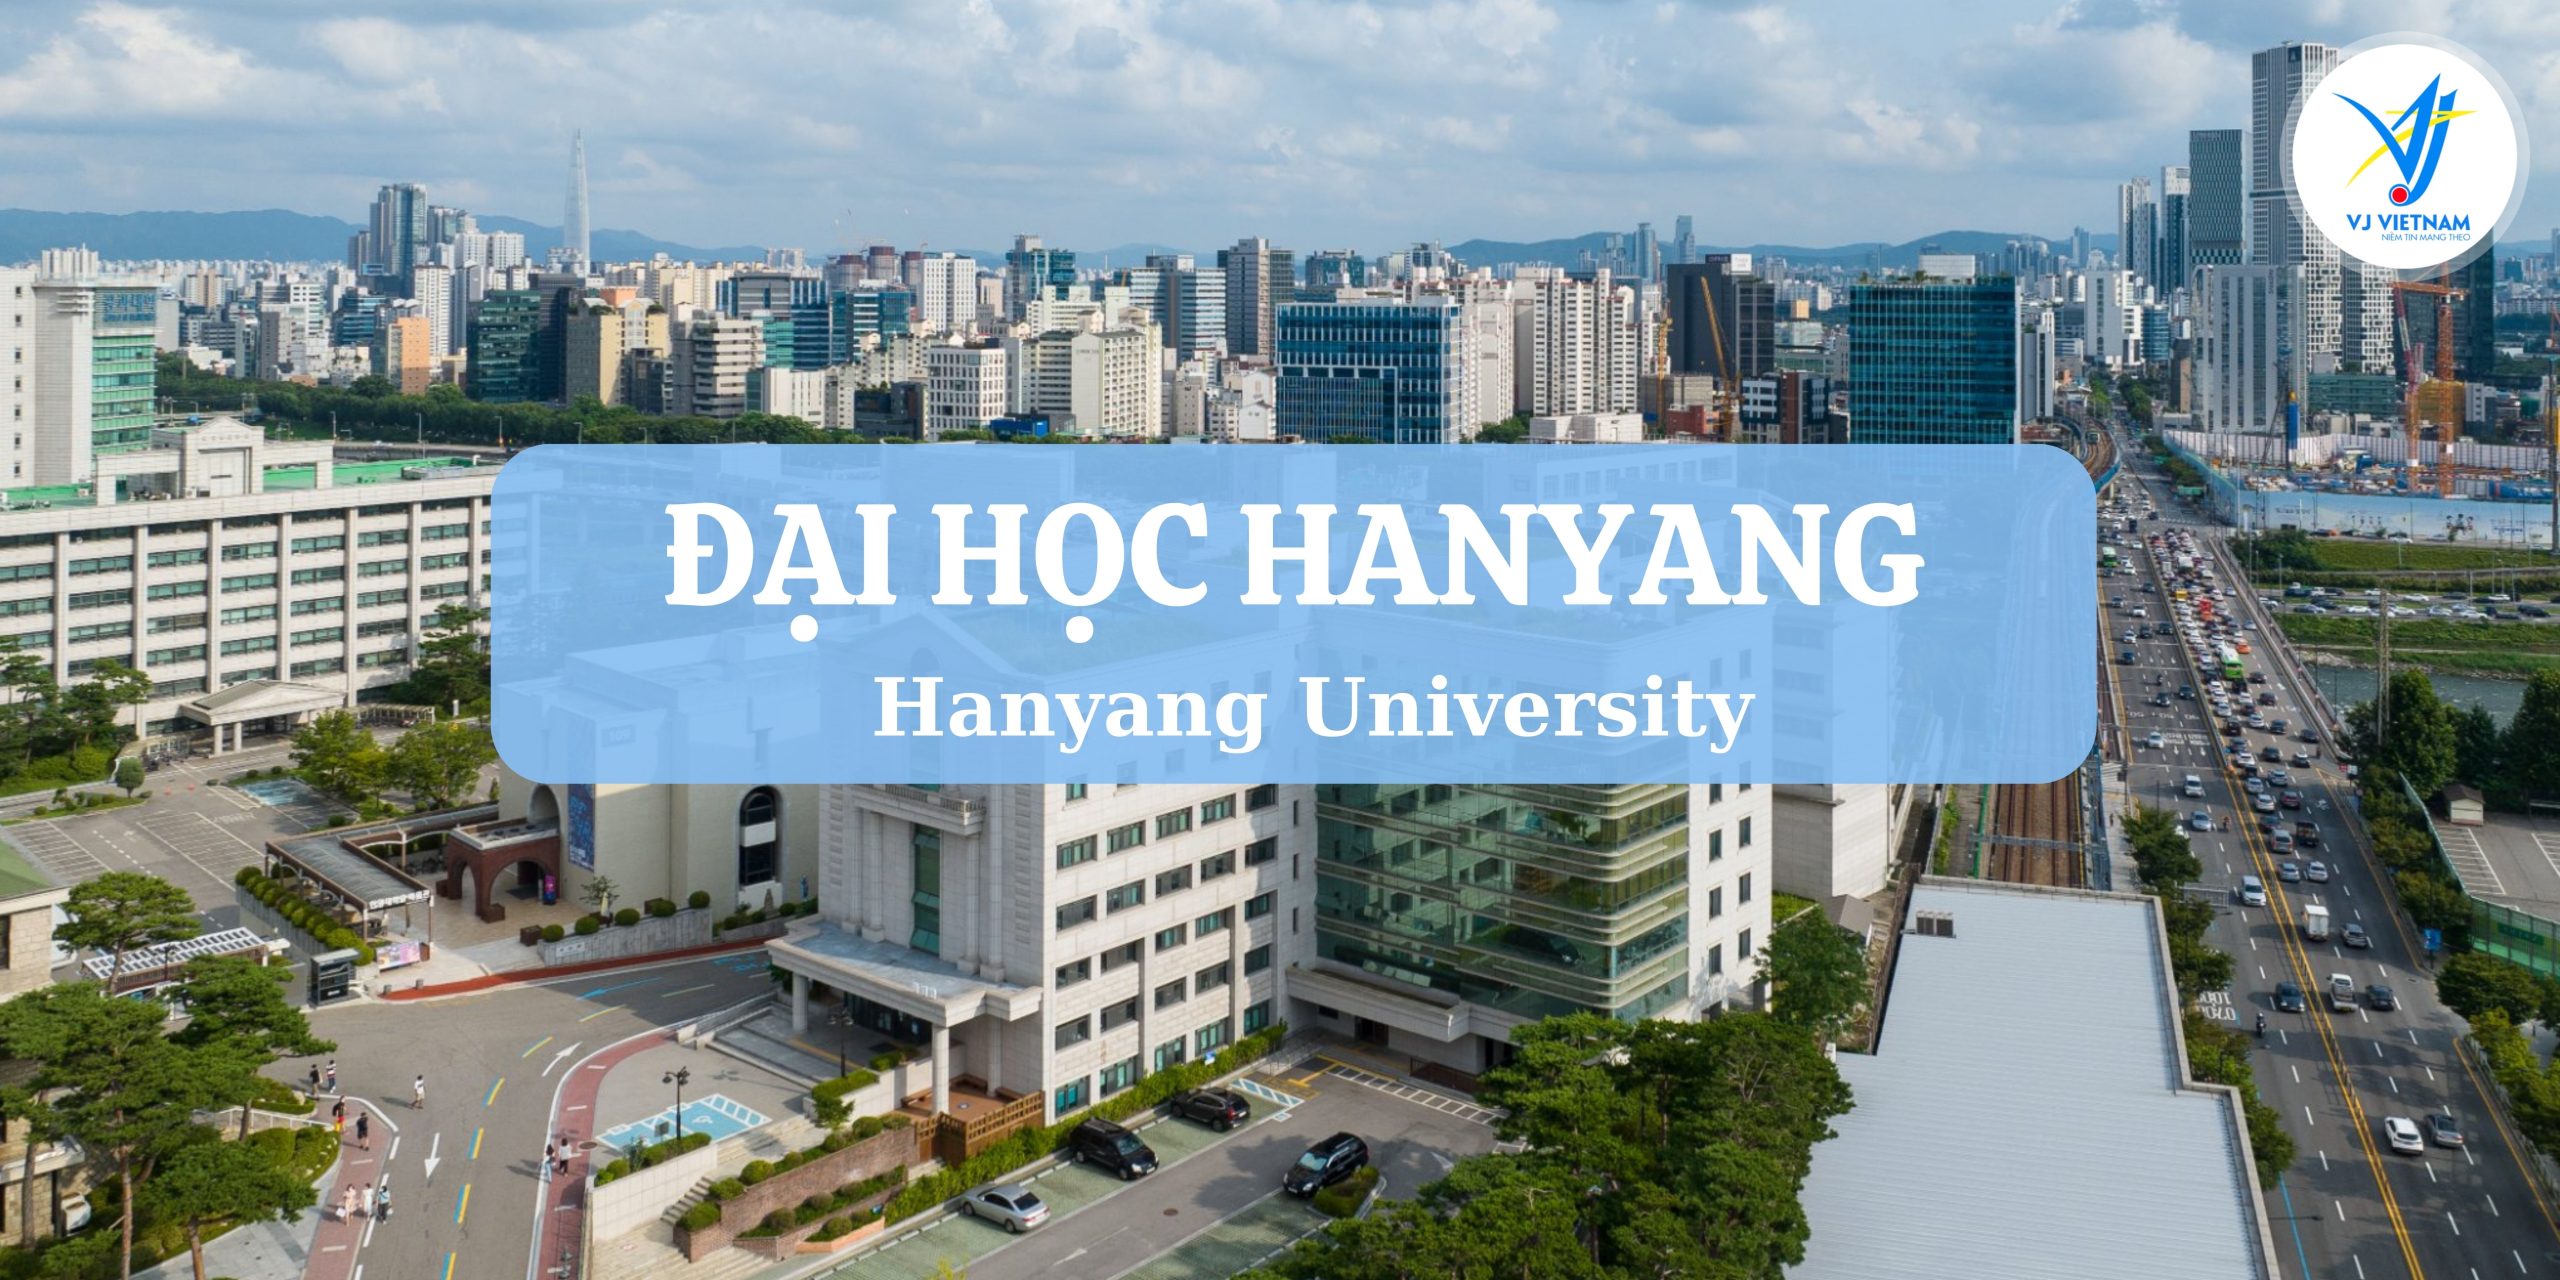 Dai hoc Hanyang scaled